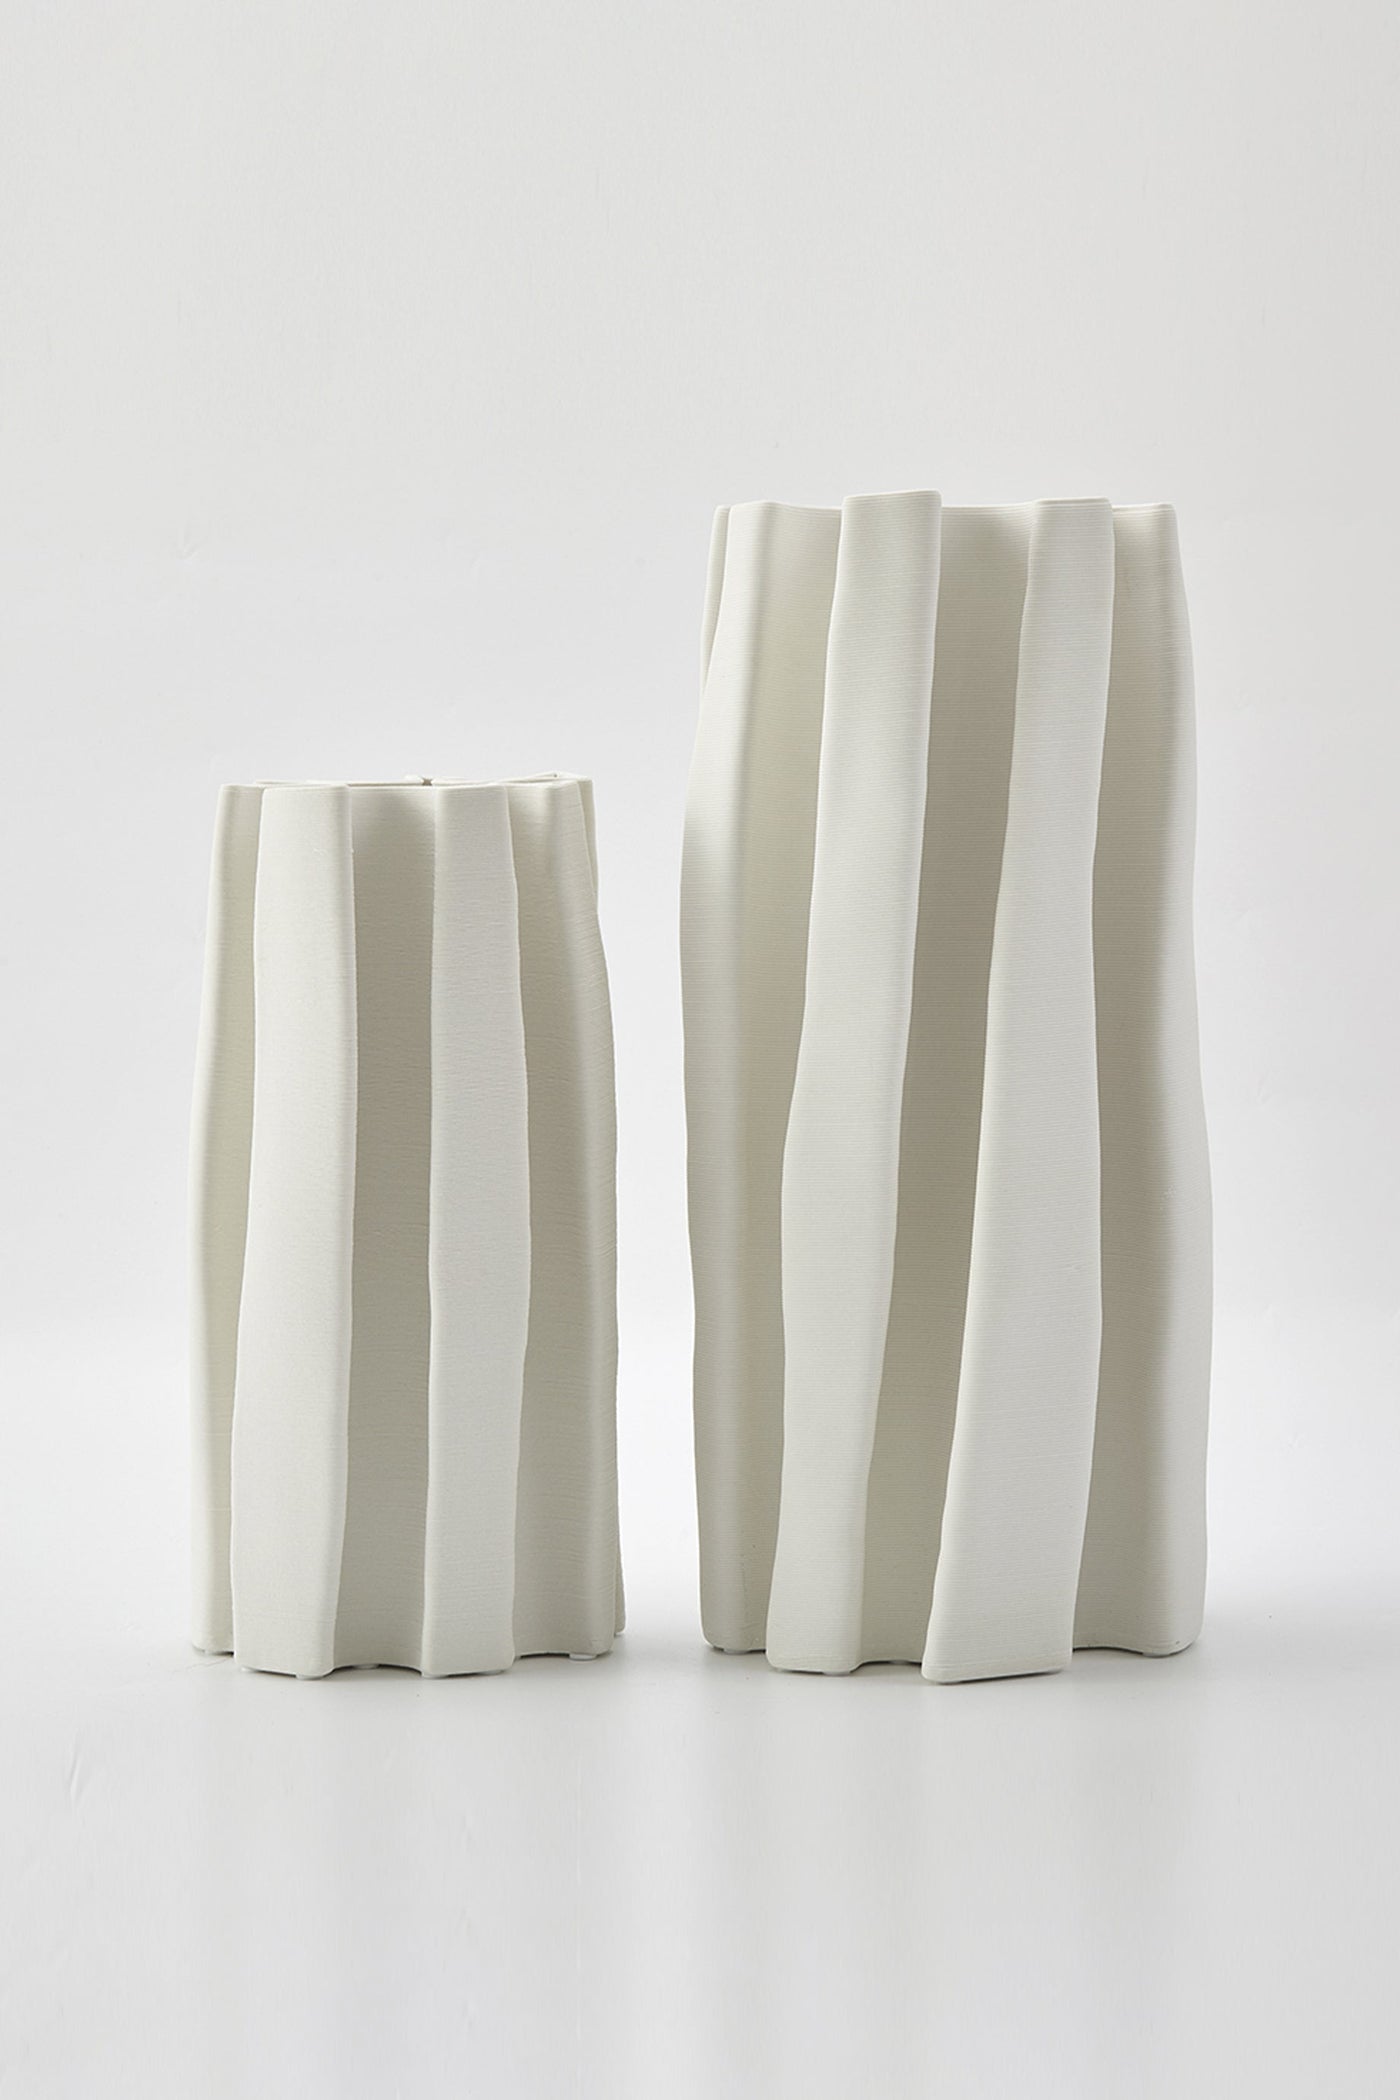 Husk Pleat Vase - Ivory